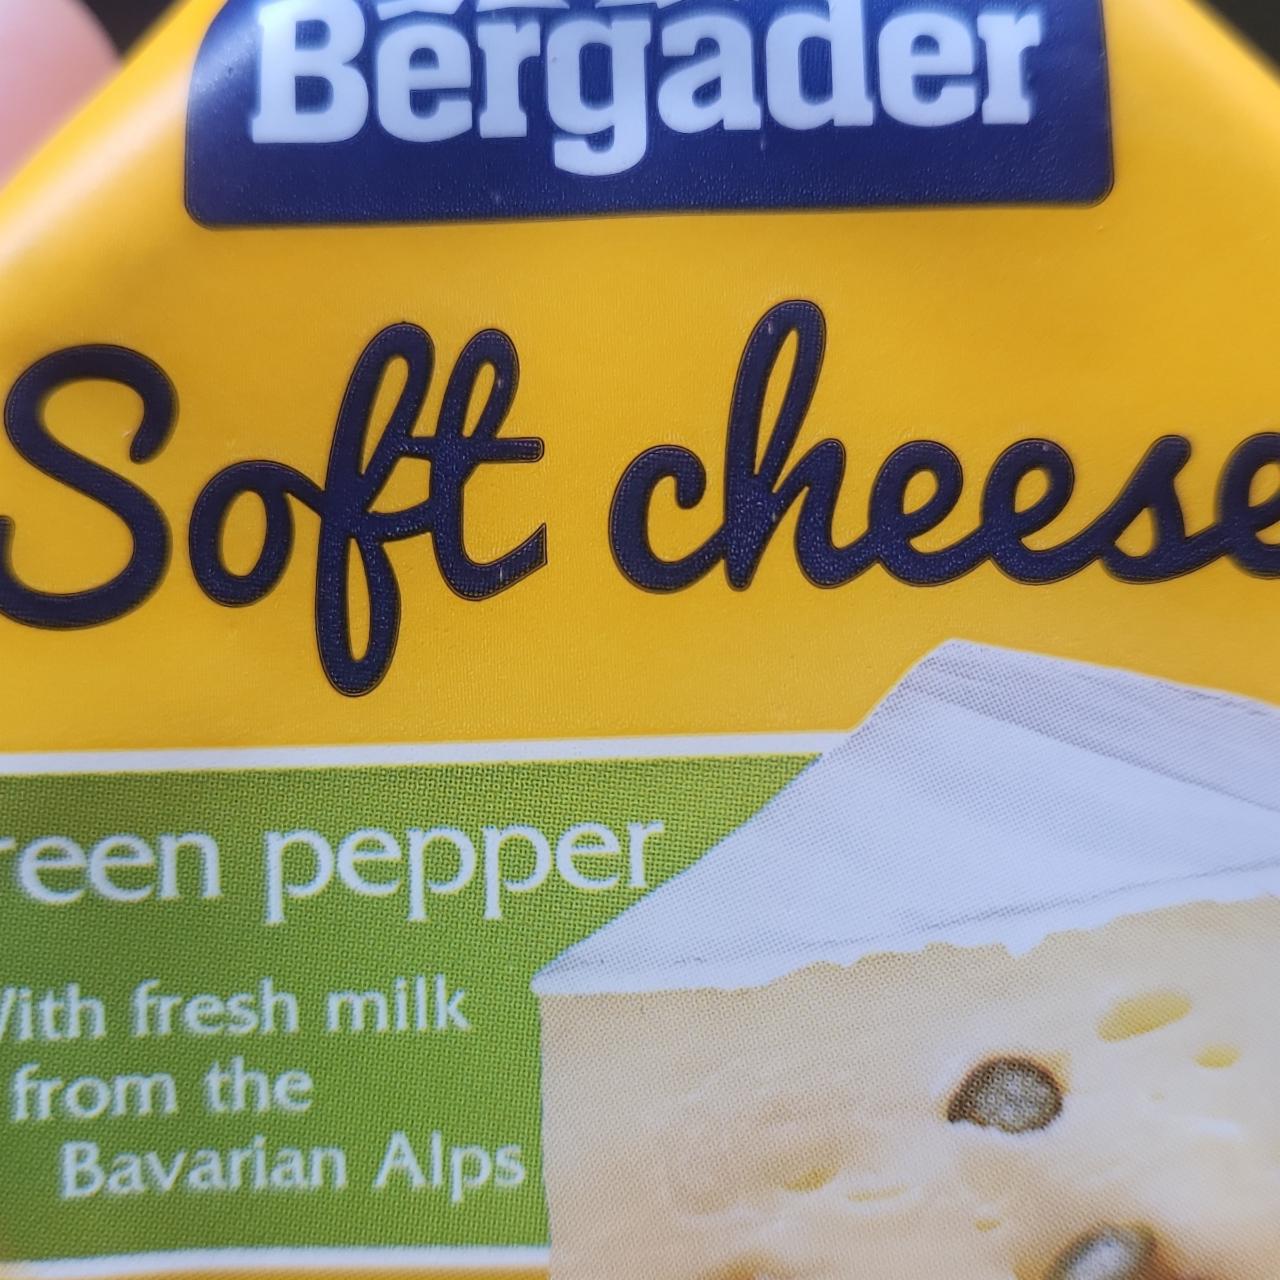 Zdjęcia - Soft cheese green pepper Bergader